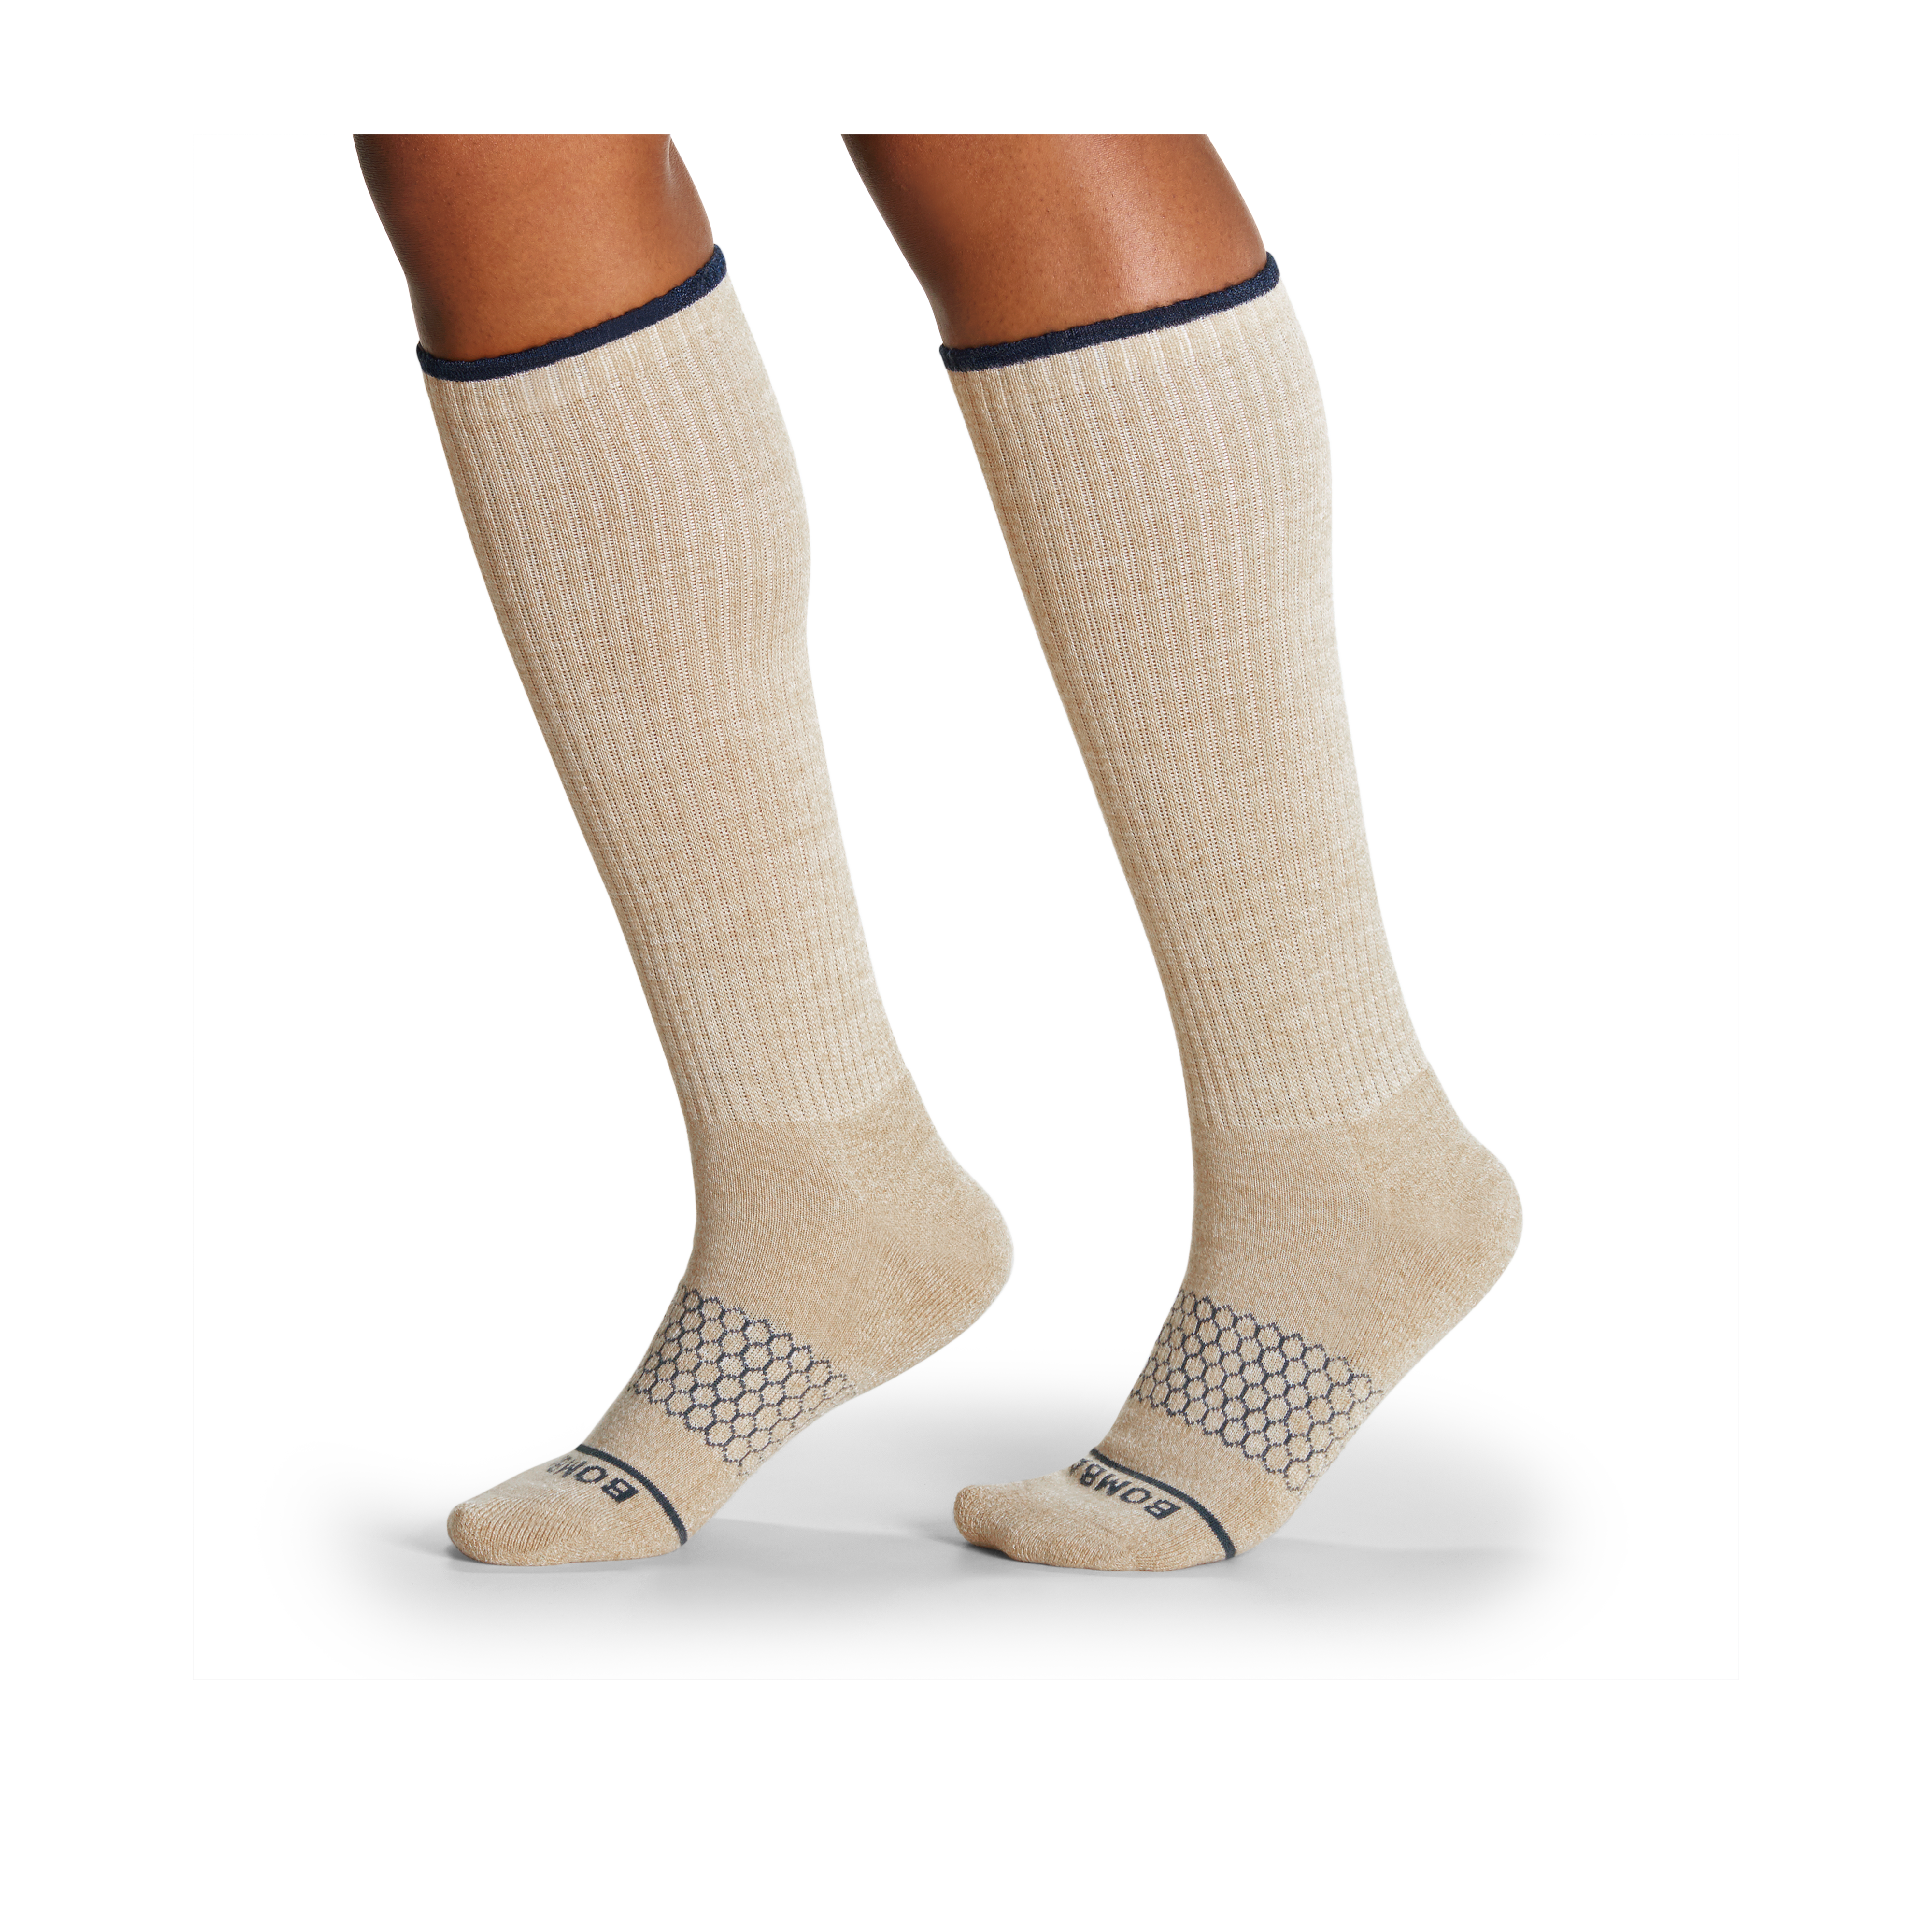 Socks 600 knee high woolpower chaussettes merinos très chaudes